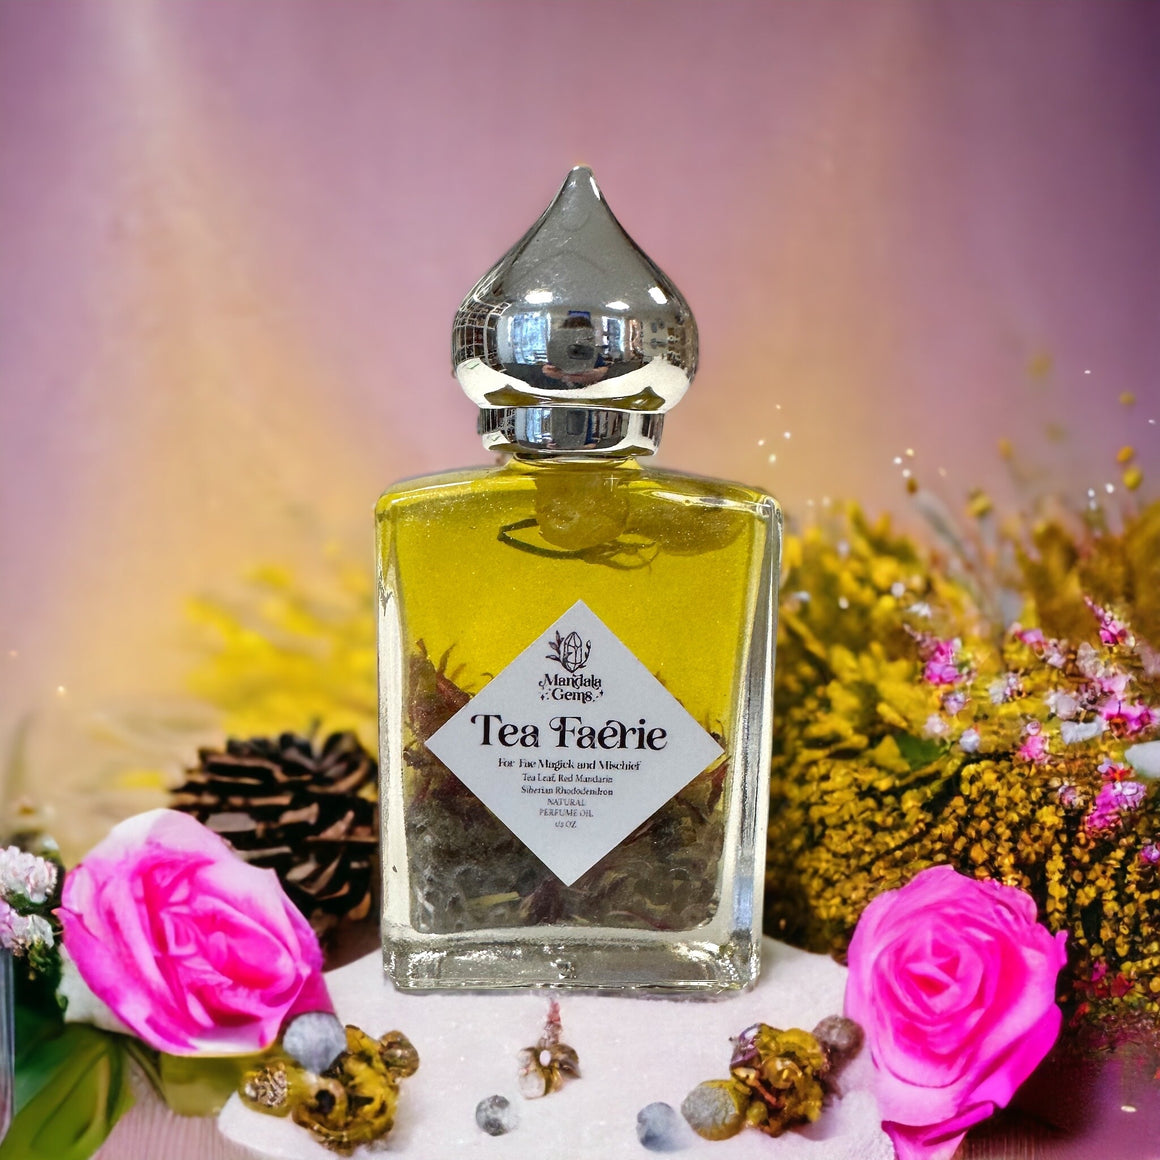 Tea Faerie Botanical Perfume Oil